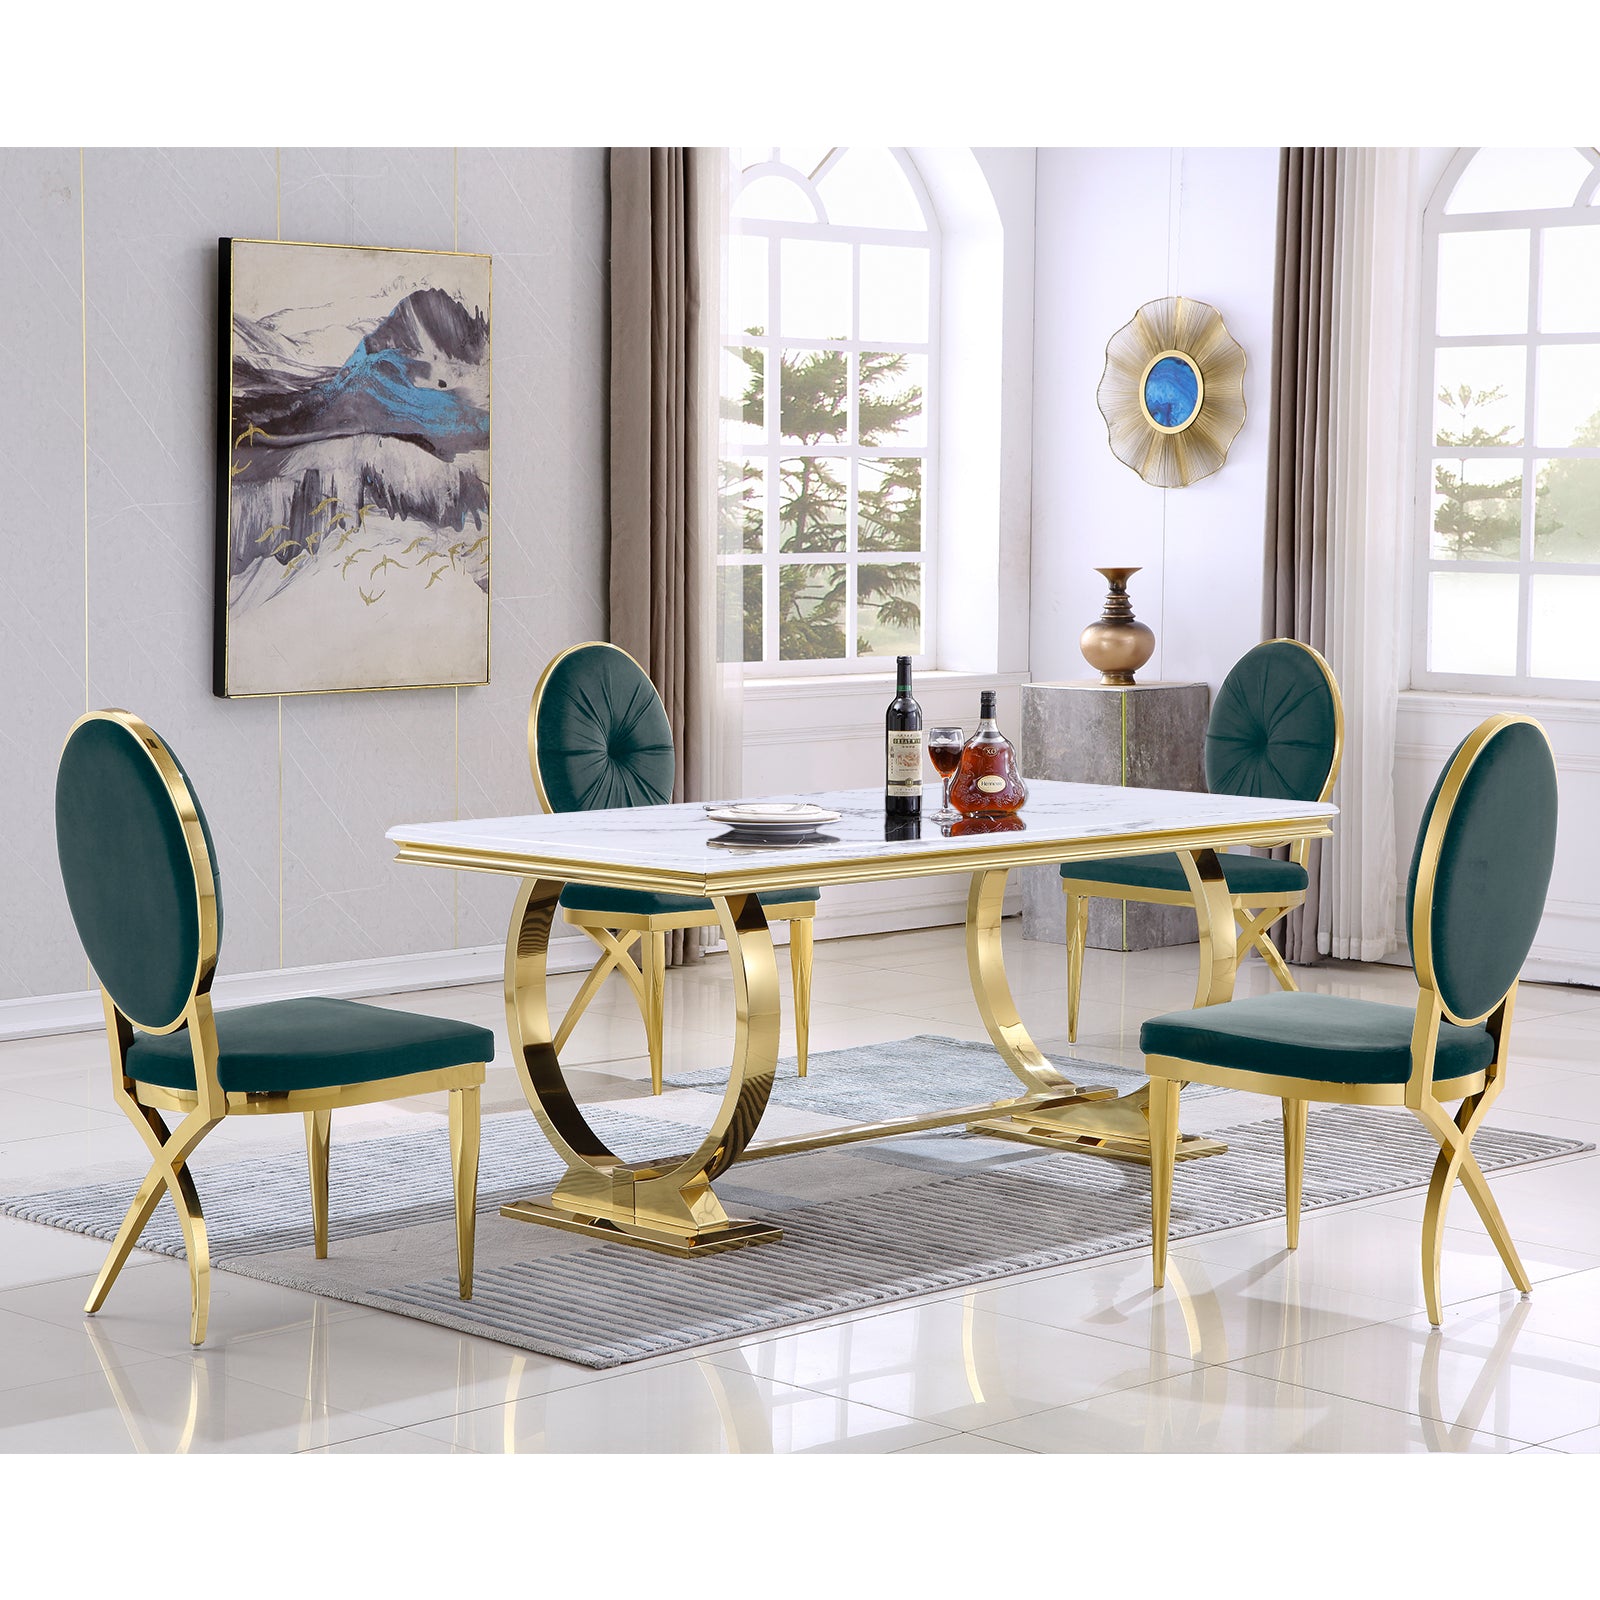 King Louis dining chairs | Dark green Velvet | Metal legs | C115